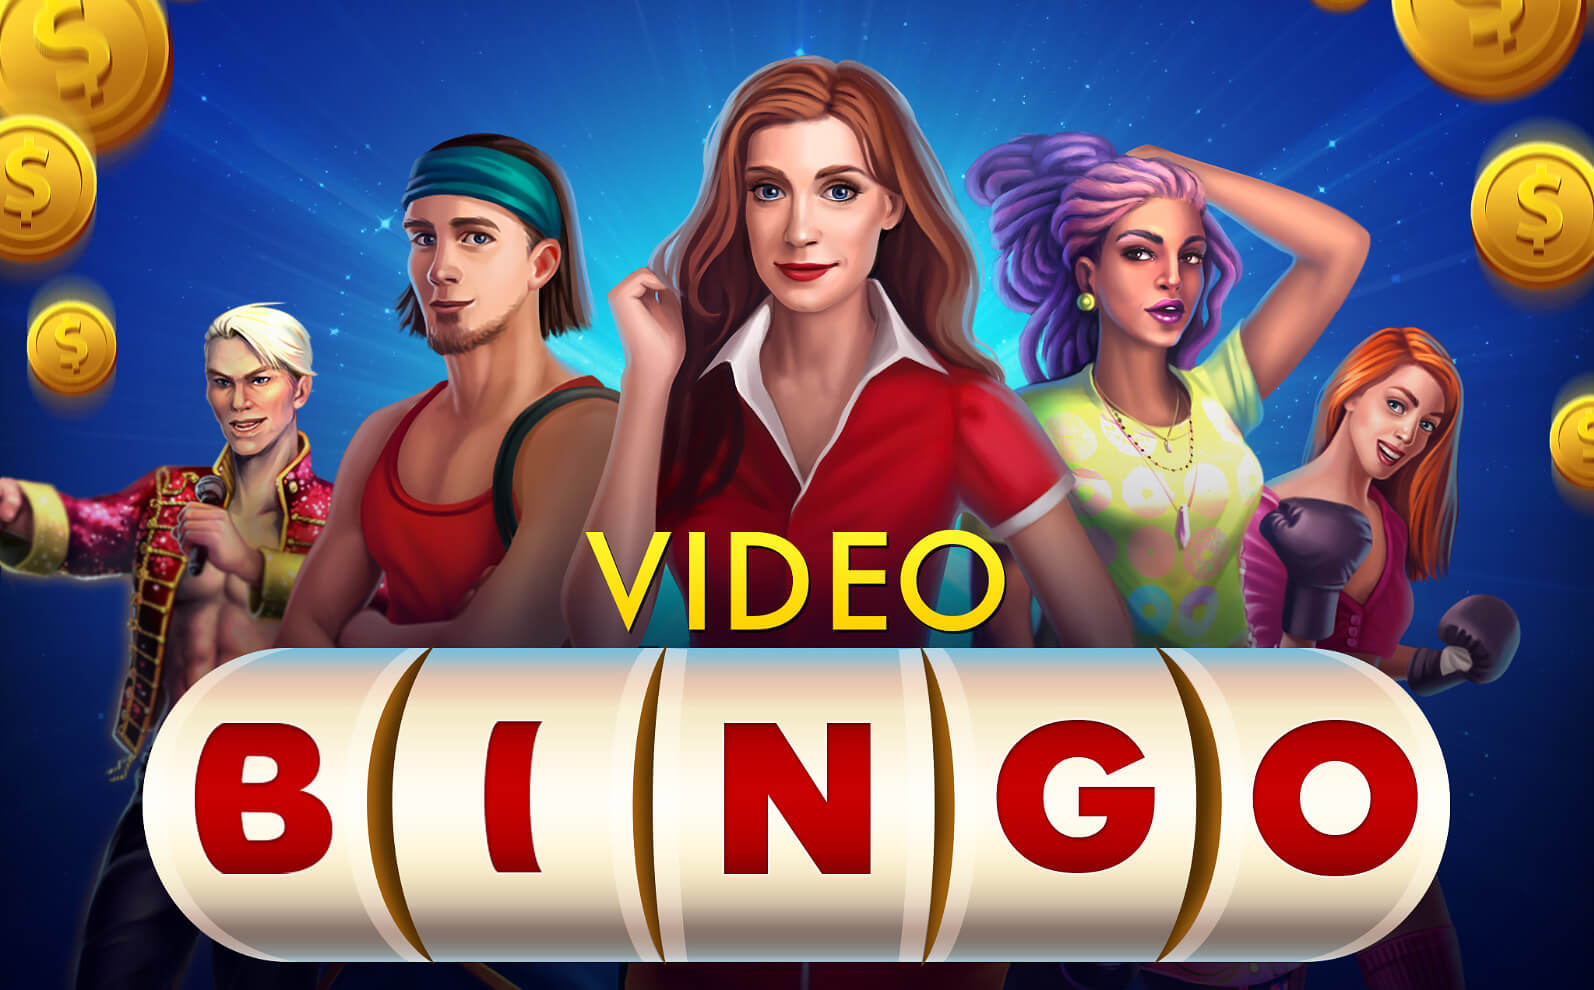 Video Bingo game themes pack